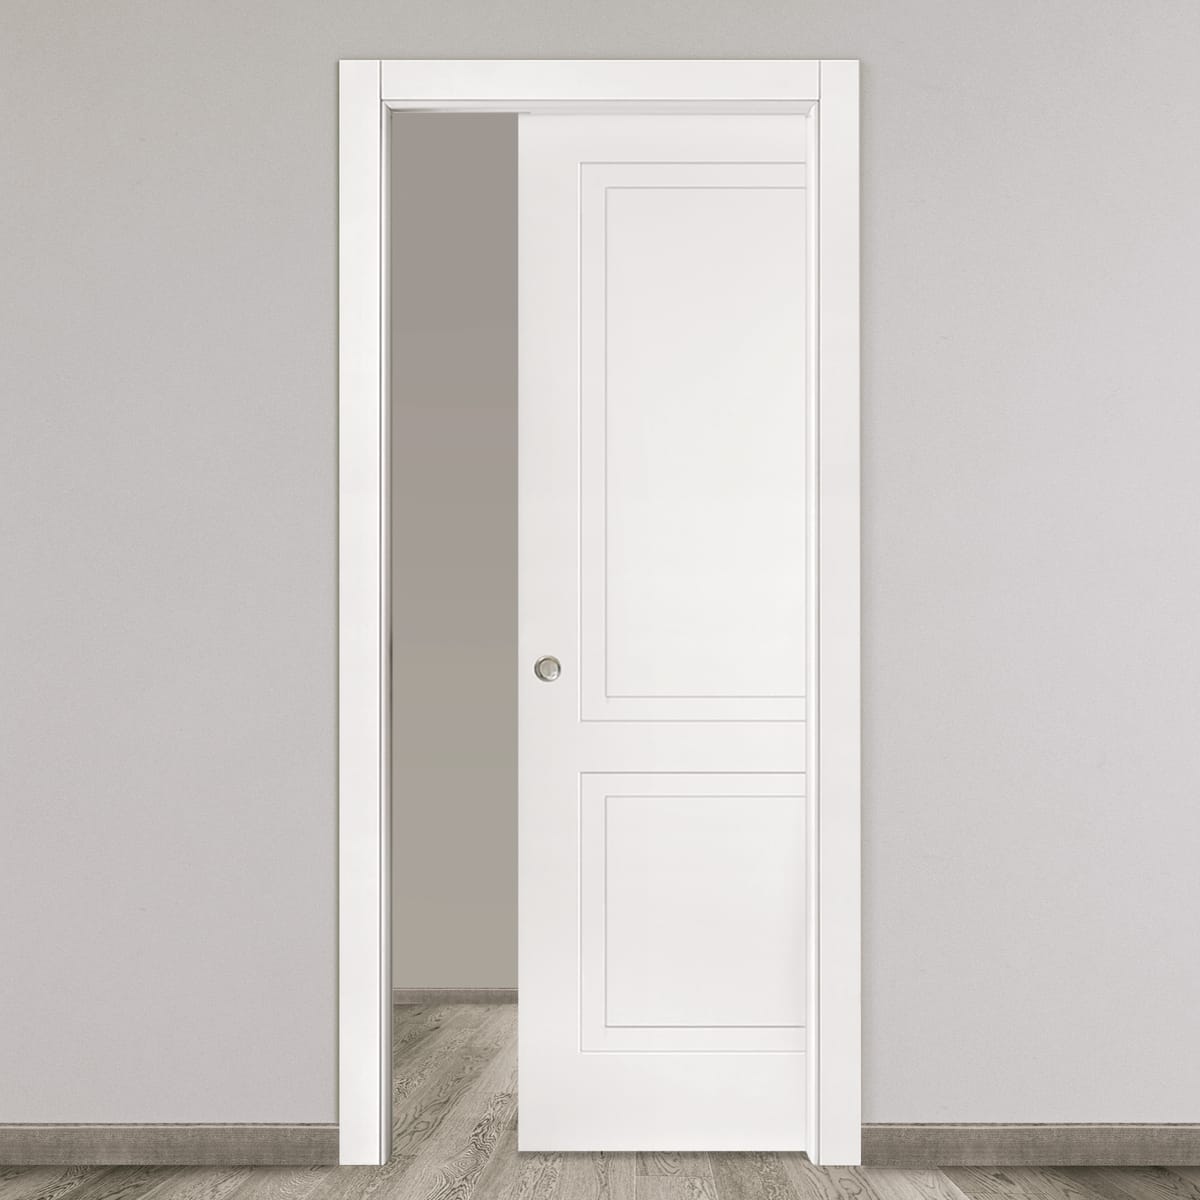 SEDNA SLIDING DOOR INSIDE WALL 210 X 60 WHITE LACQUERED